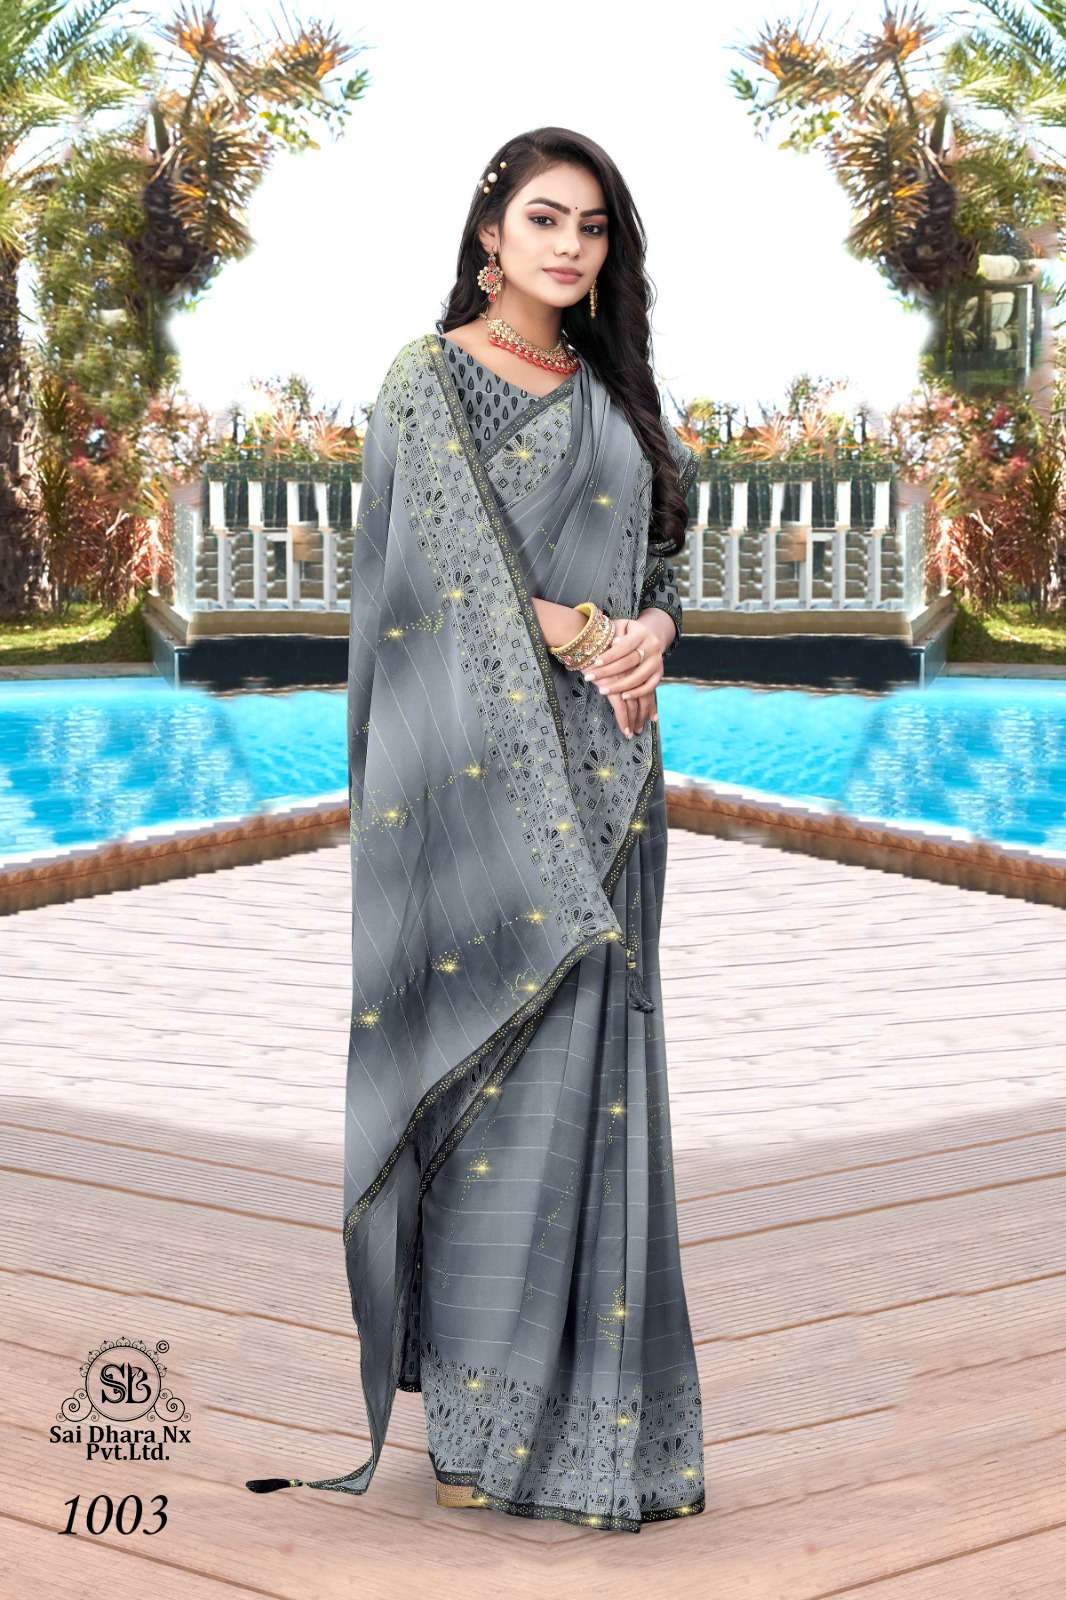 SaiDharaNx Presents ripple fabric presents saree with latest design  wholesale shop in surat - SaiDharaNx